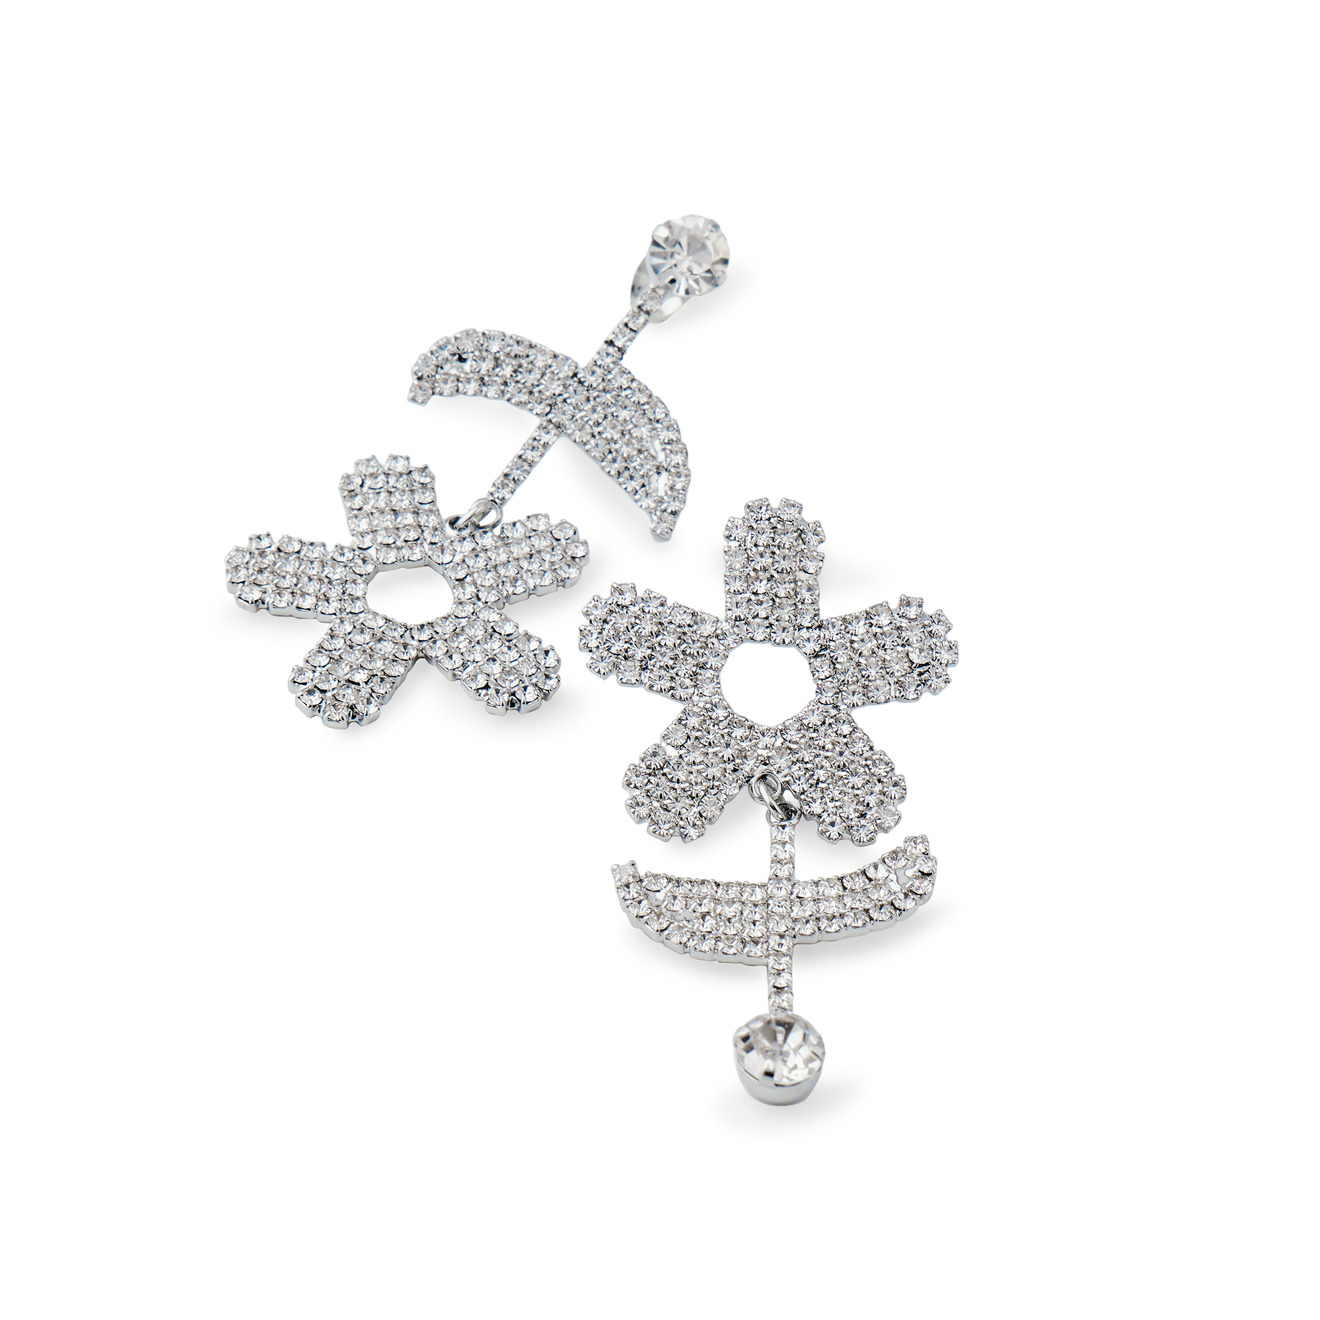 Herald Percy Серебристые серьги-цветы с кристаллами herald percy серебристые серьги кольца с кристаллами